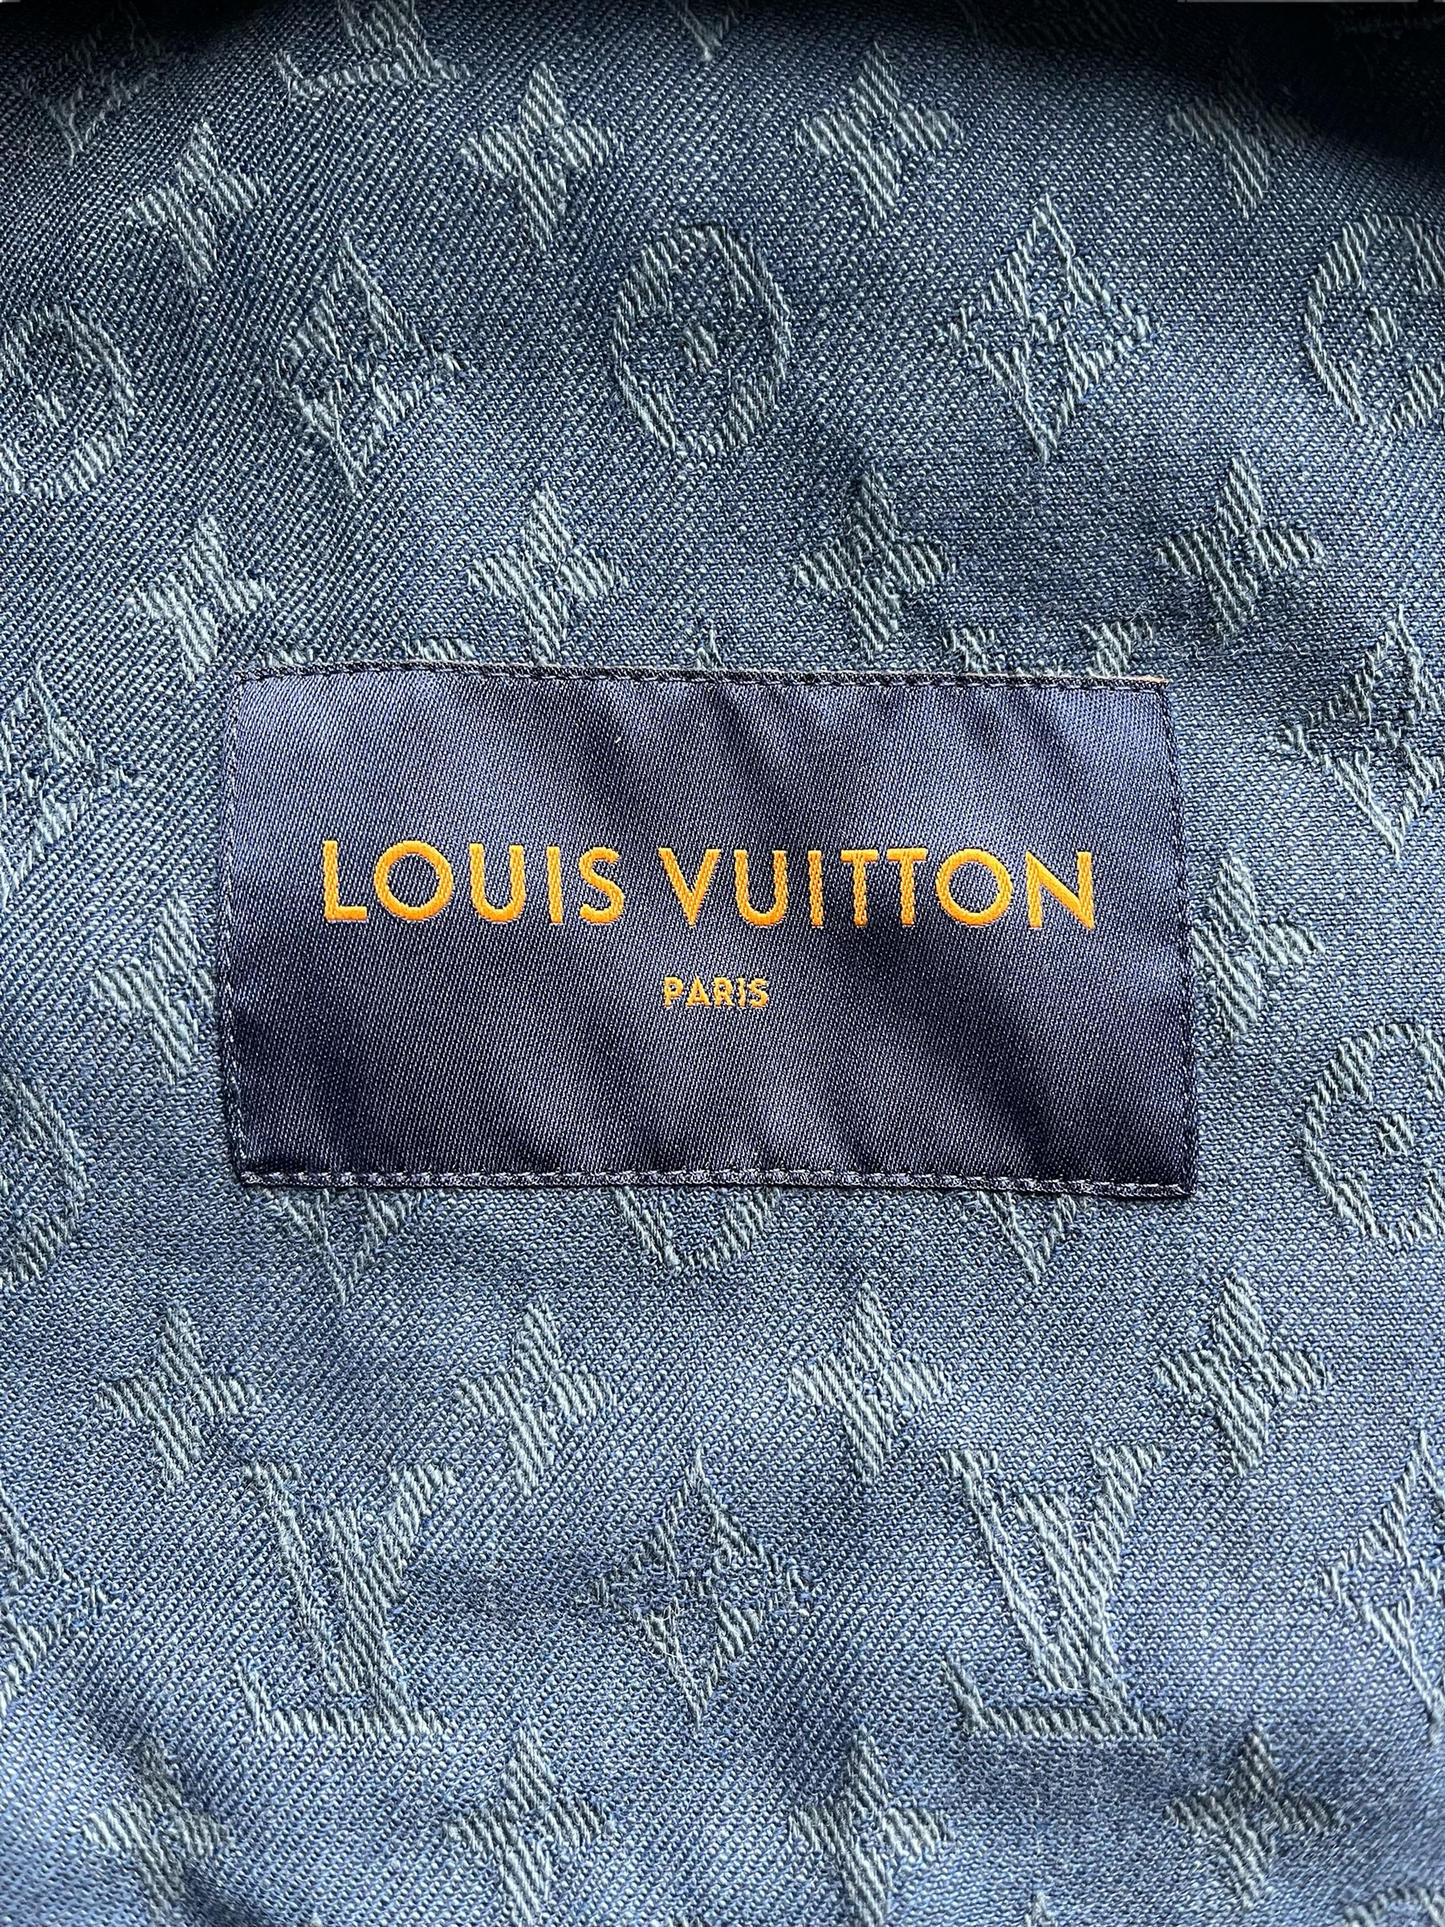 Louis Vuitton Monogram Padded Denim Jacket 1AATPN 1AATPO, Blue, 48